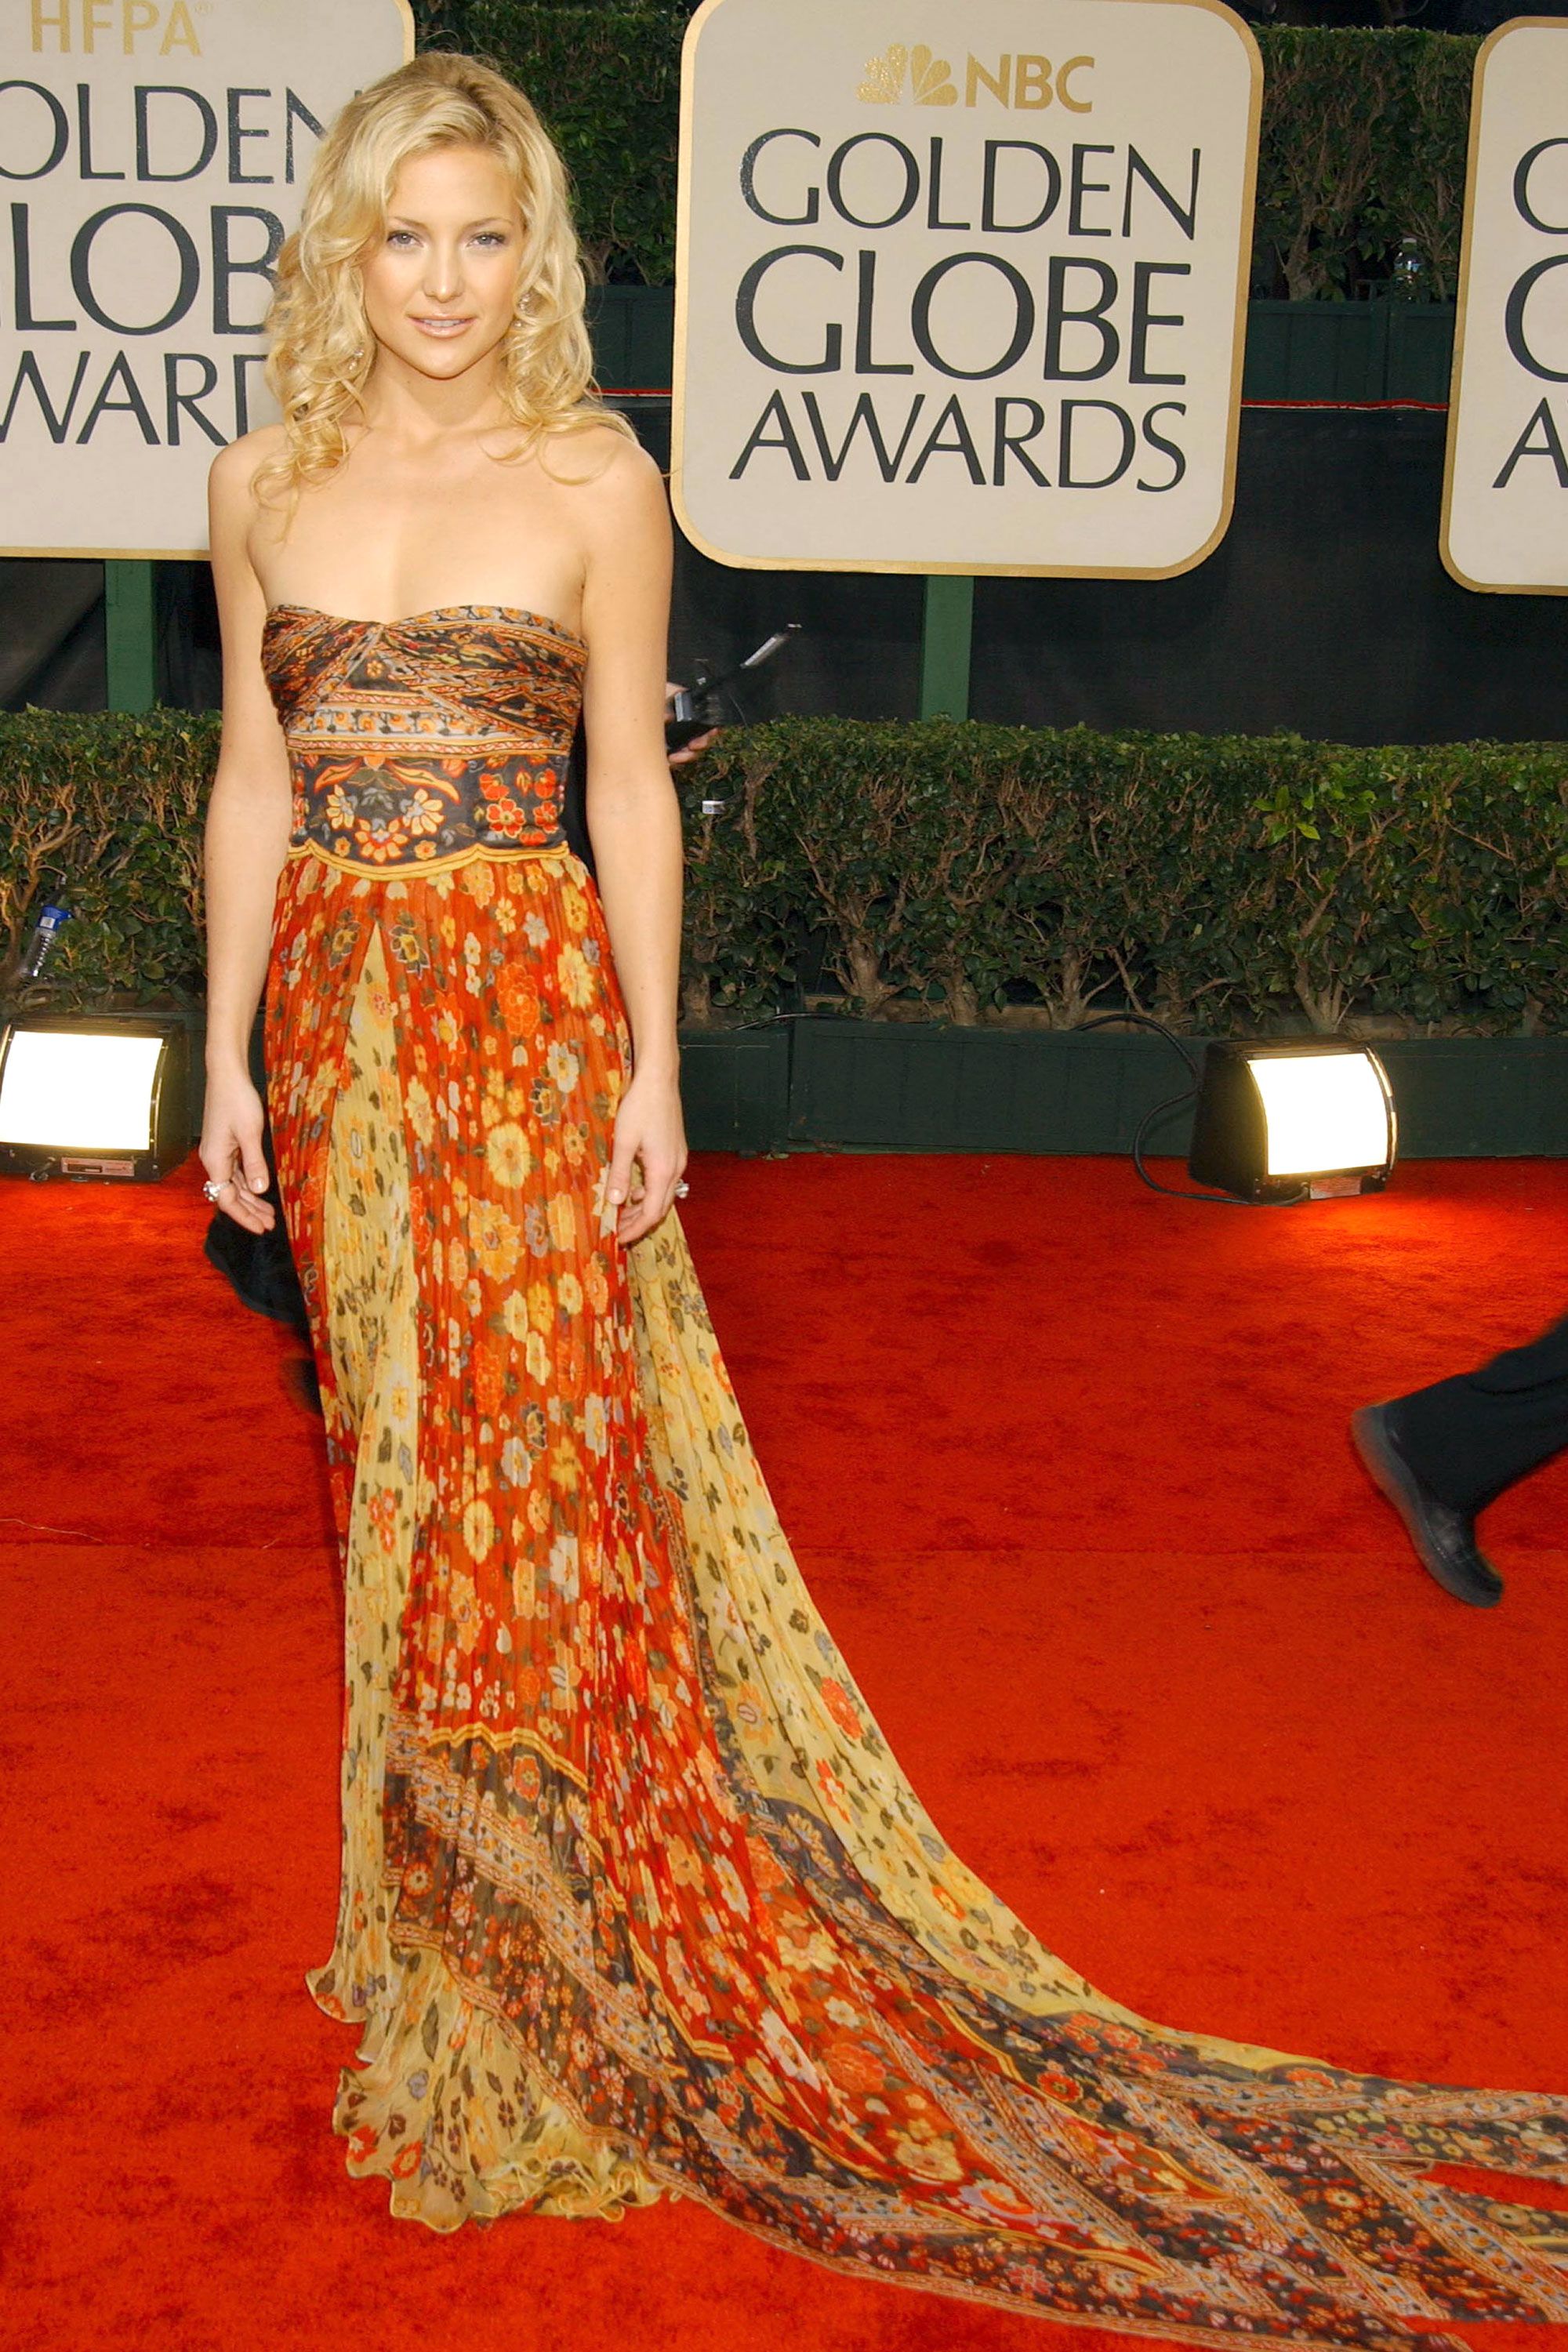 Cannes Film Festival's sexiest celebrity red carpet dresses